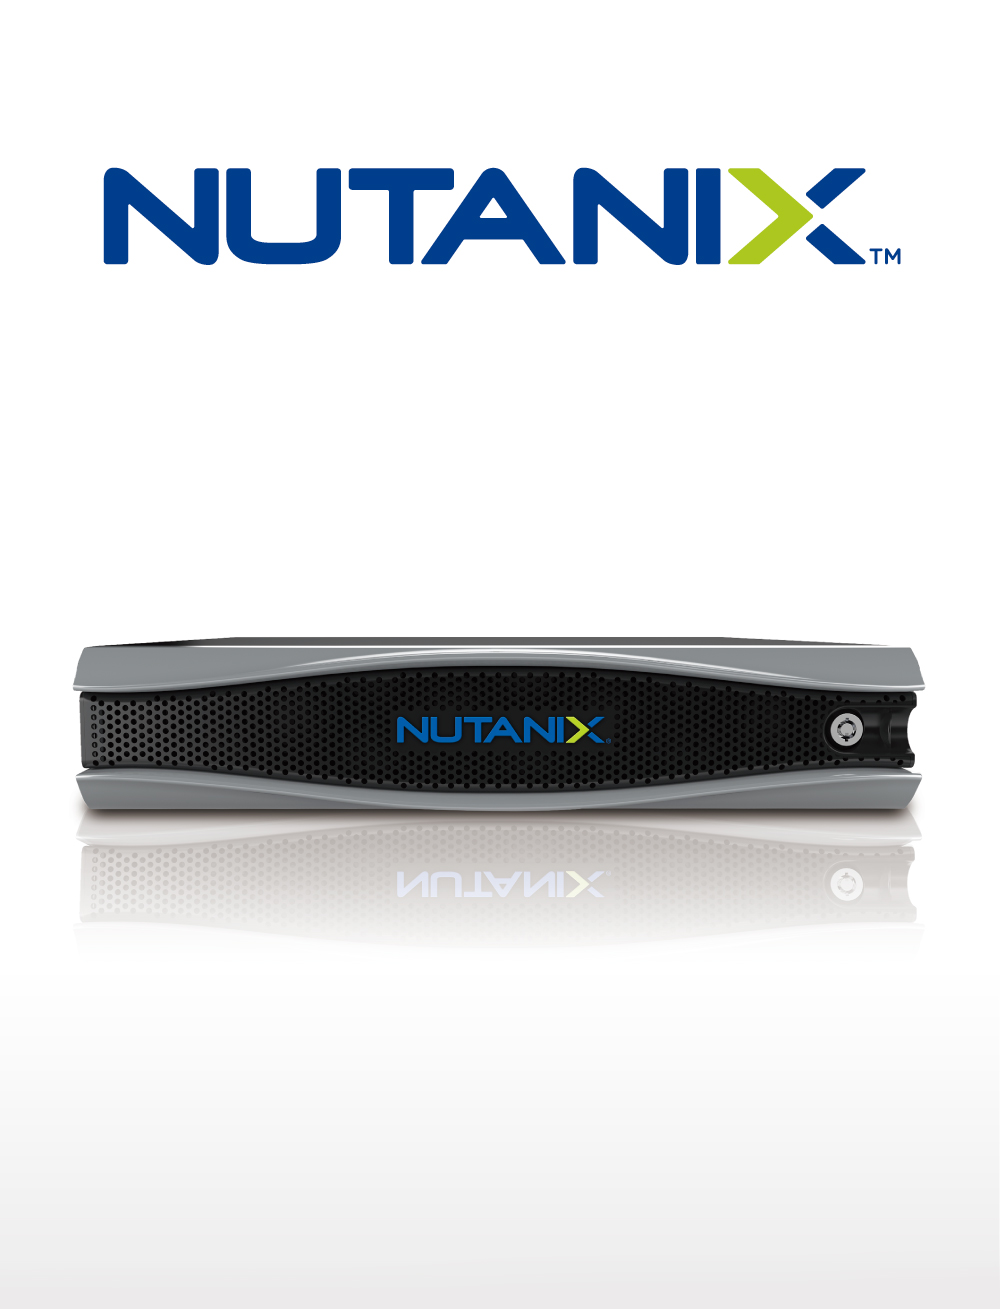 Nutanix はじめてガイド ネットワールド